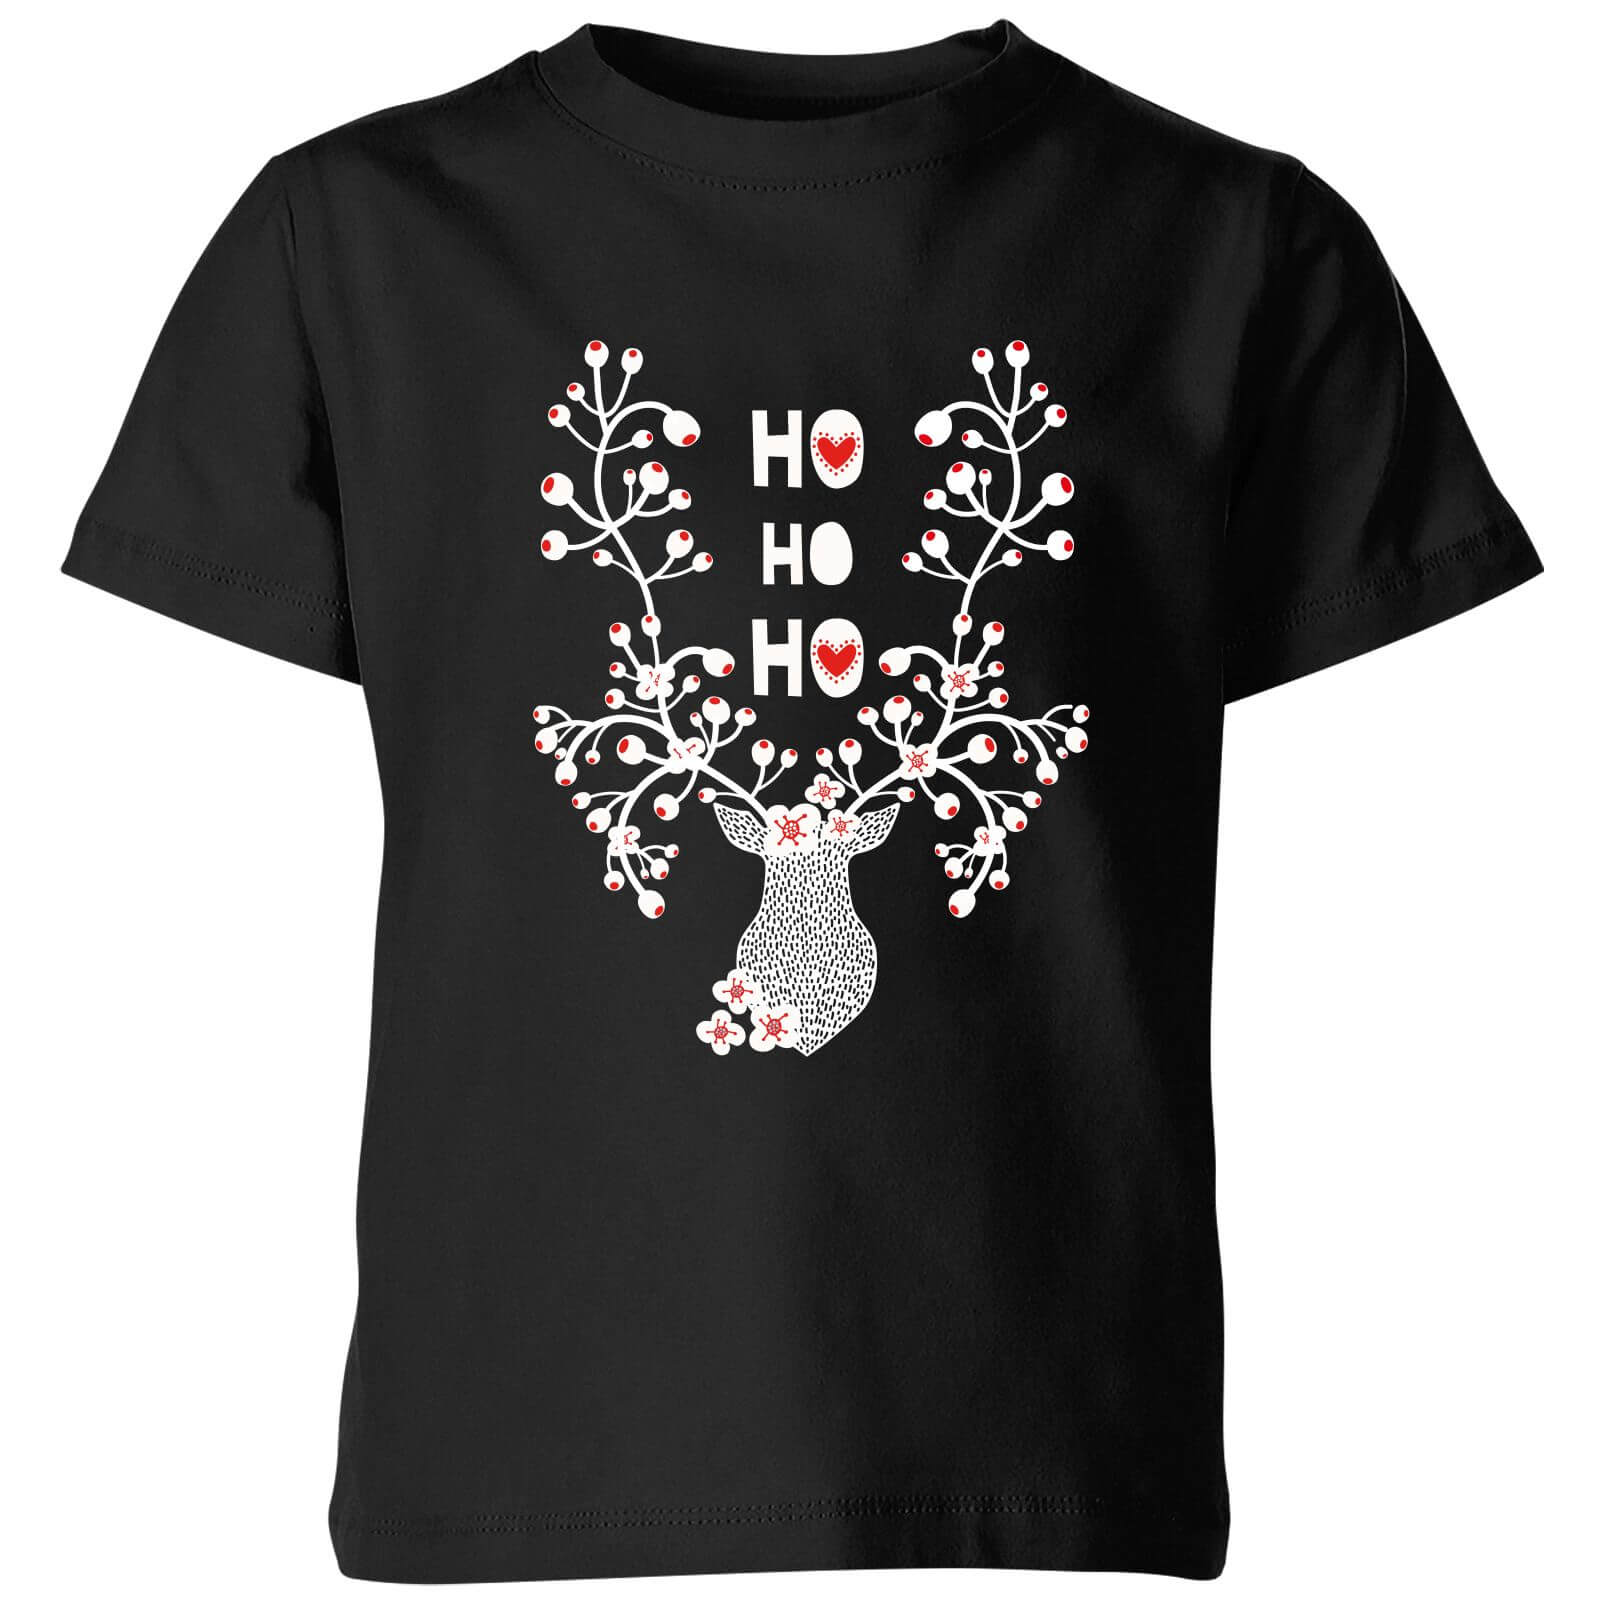 Ho Ho Ho Reindeer Kids' T-Shirt - Black - 5-6 Years - Black